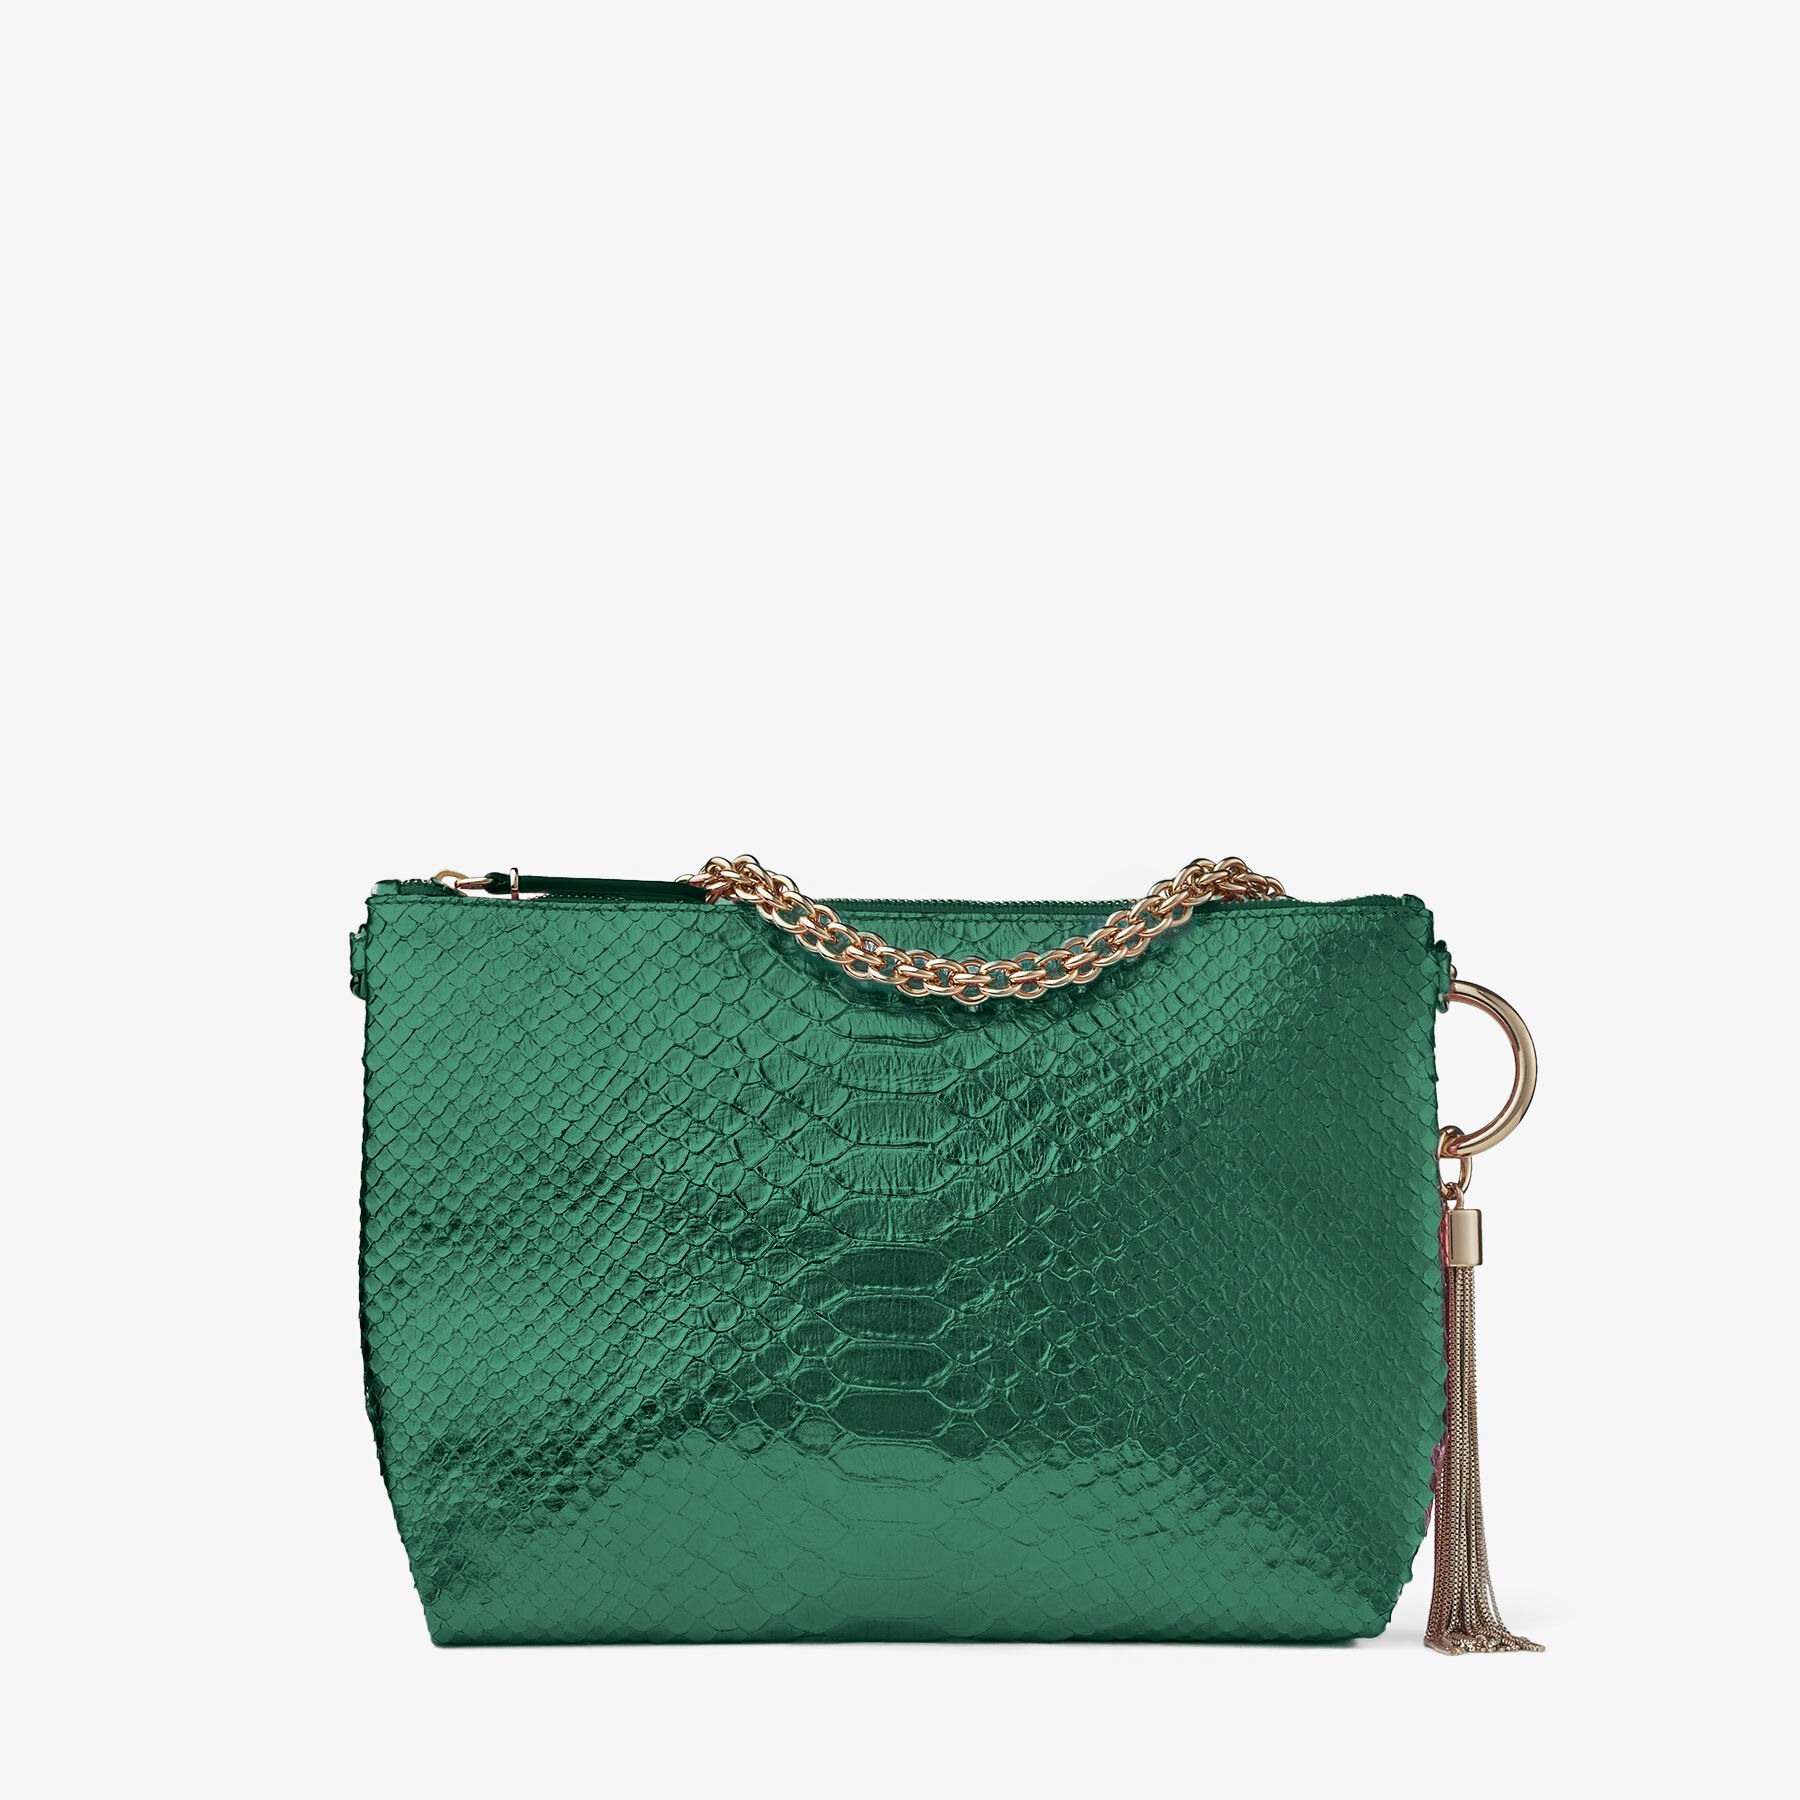 CALLIE |Dark Green Metallic Snake Printed Leather Clutch Bag | New 